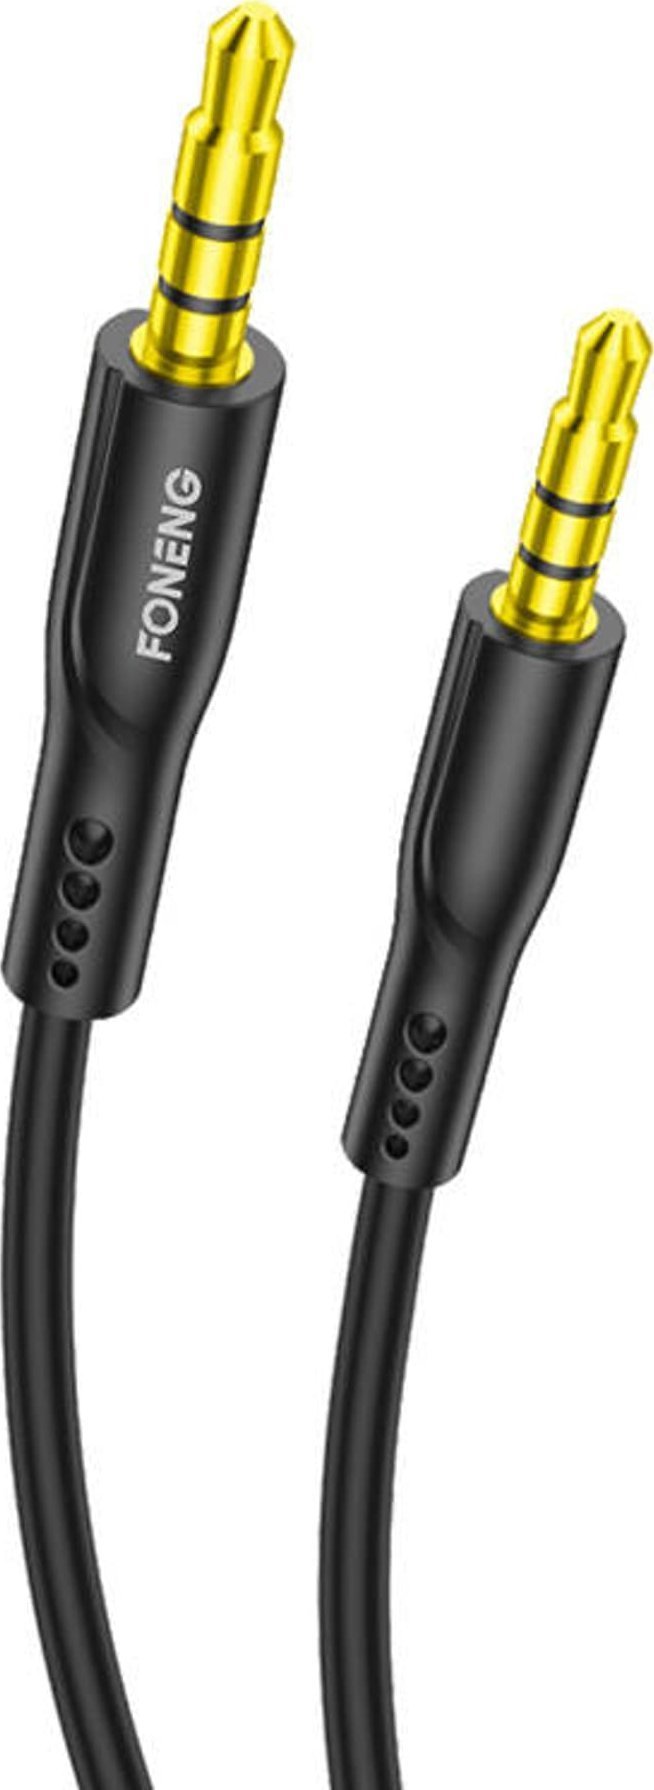 Cablu Foneng Cablu audio jack AUX 3,5 mm Foneng BM22 (negru)